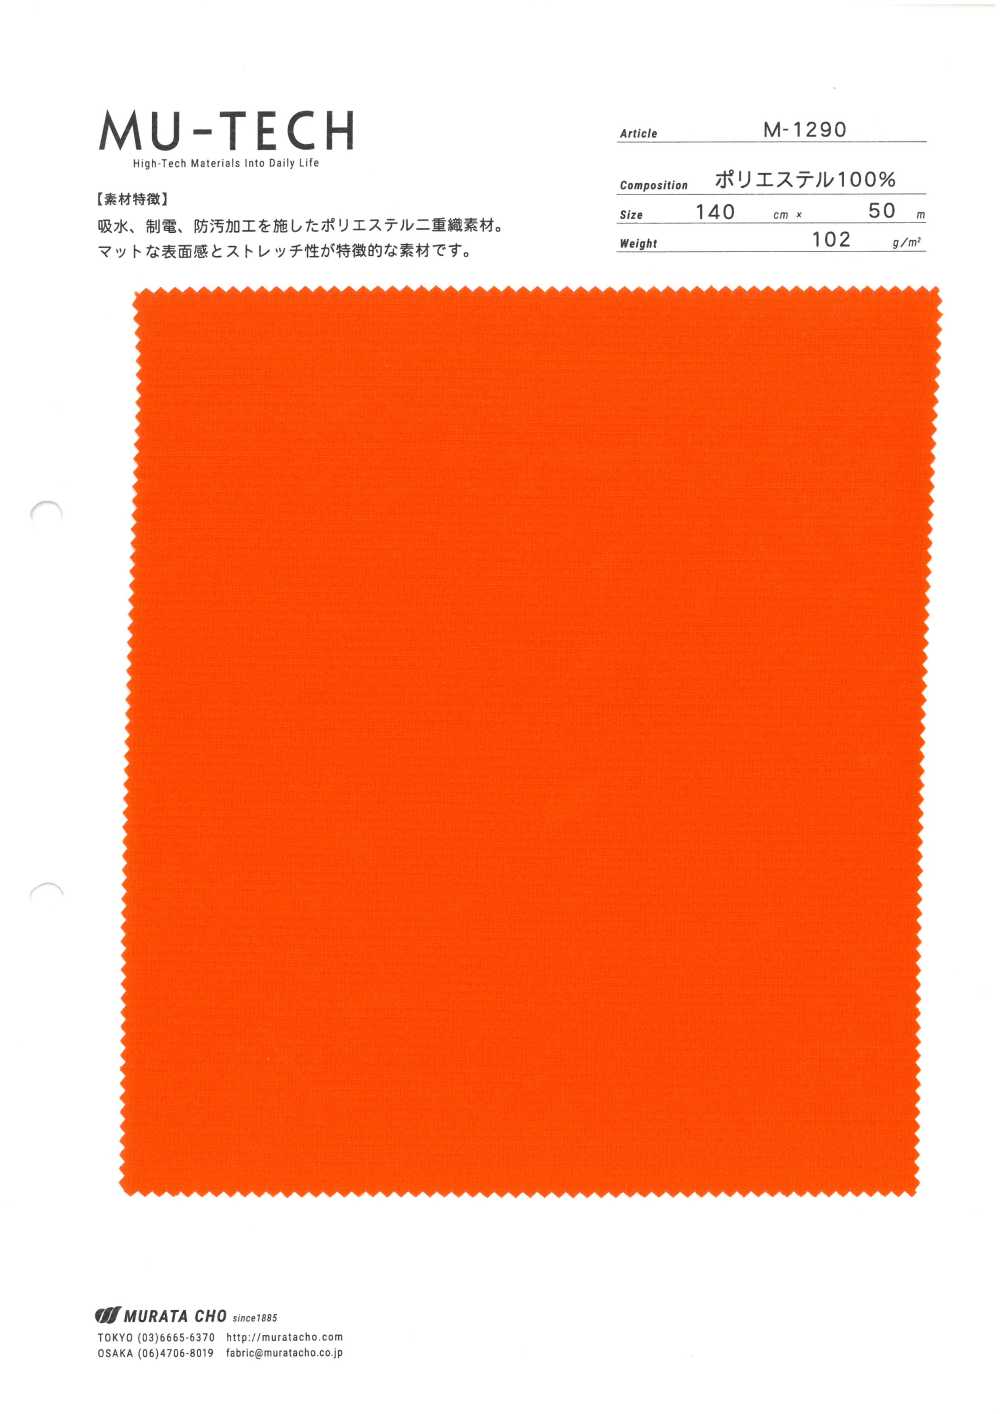 M-1290 MU-TECH Polyester Double Weave[Textile / Fabric] Muratacho